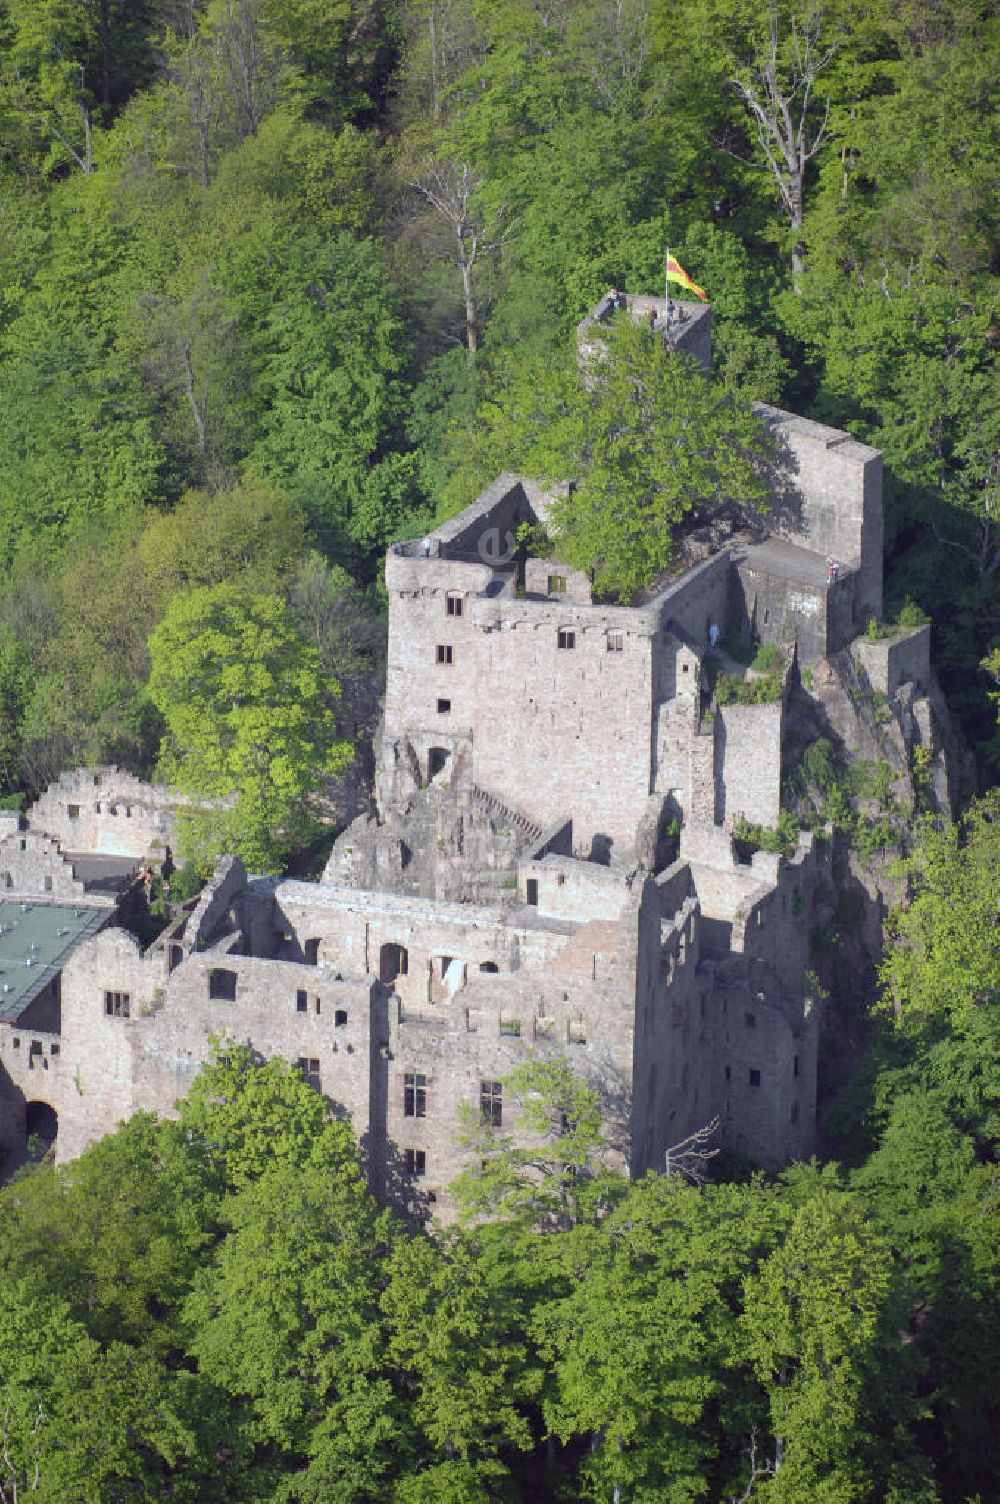 Luftbild BADEN-BADEN - Schloss Hohenbaden bei Baden-Baden in Baden-Würtemberg